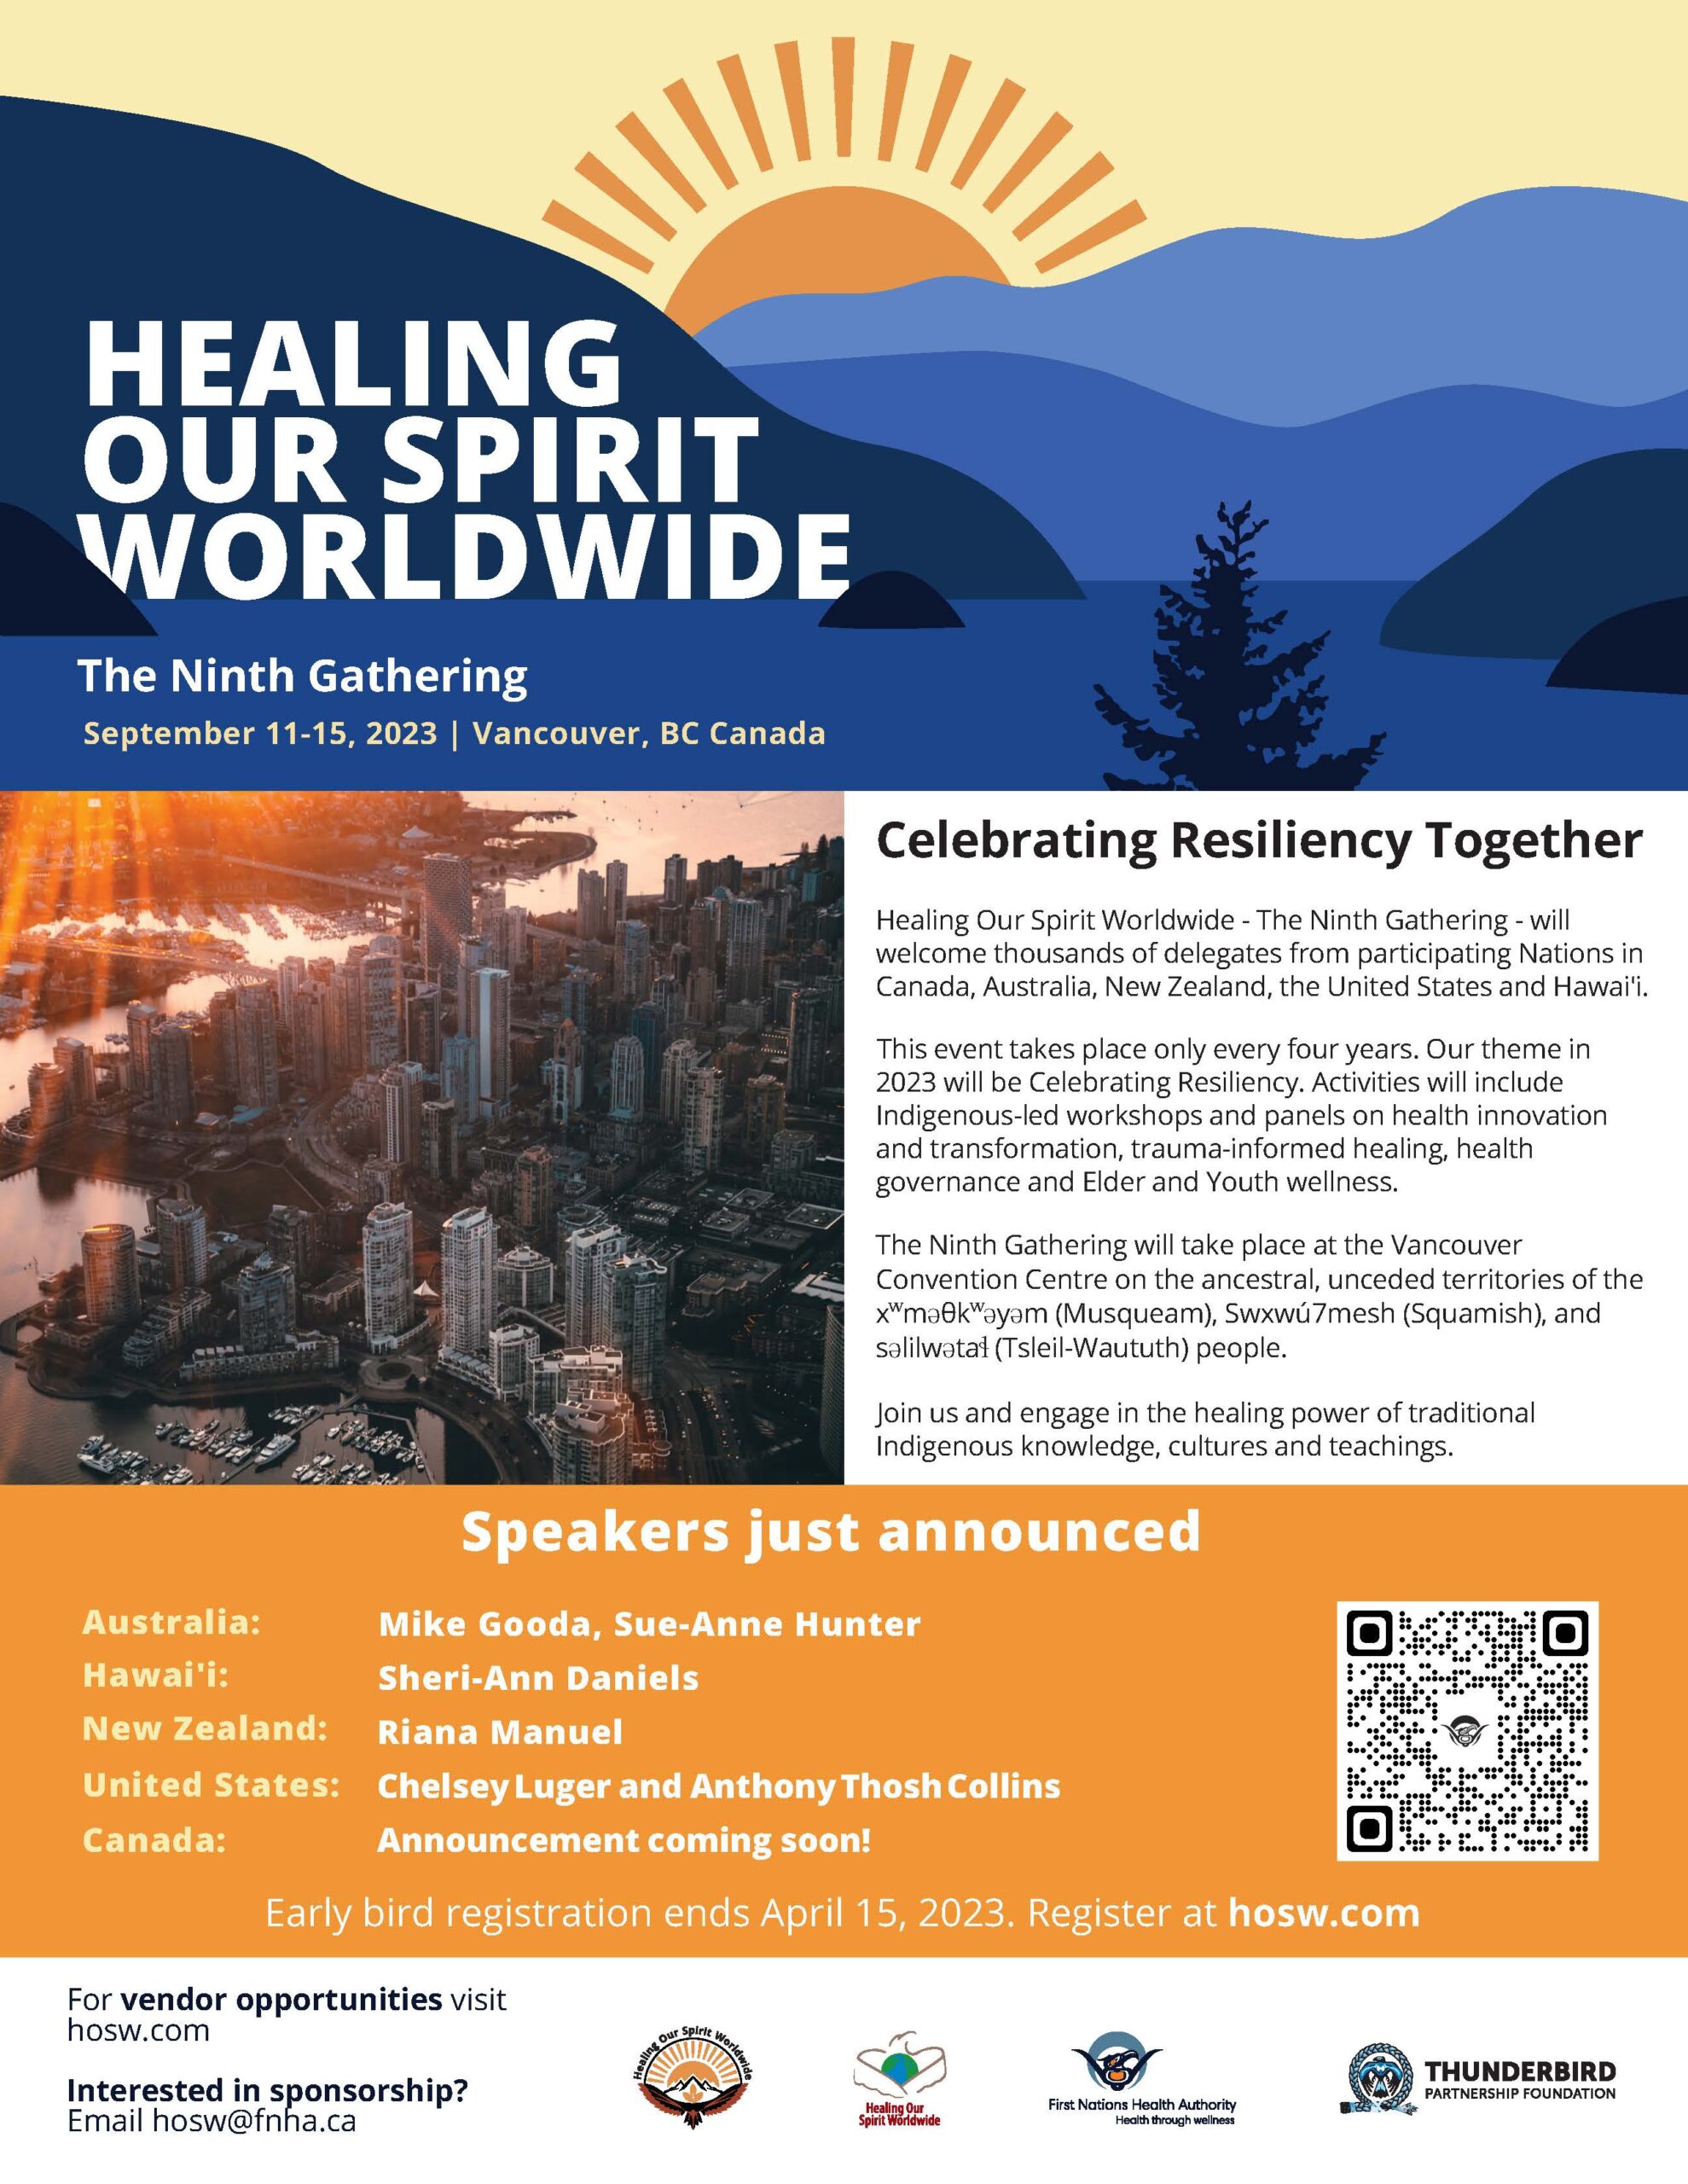 Healing Our Spirit Worldwide gathering brochure